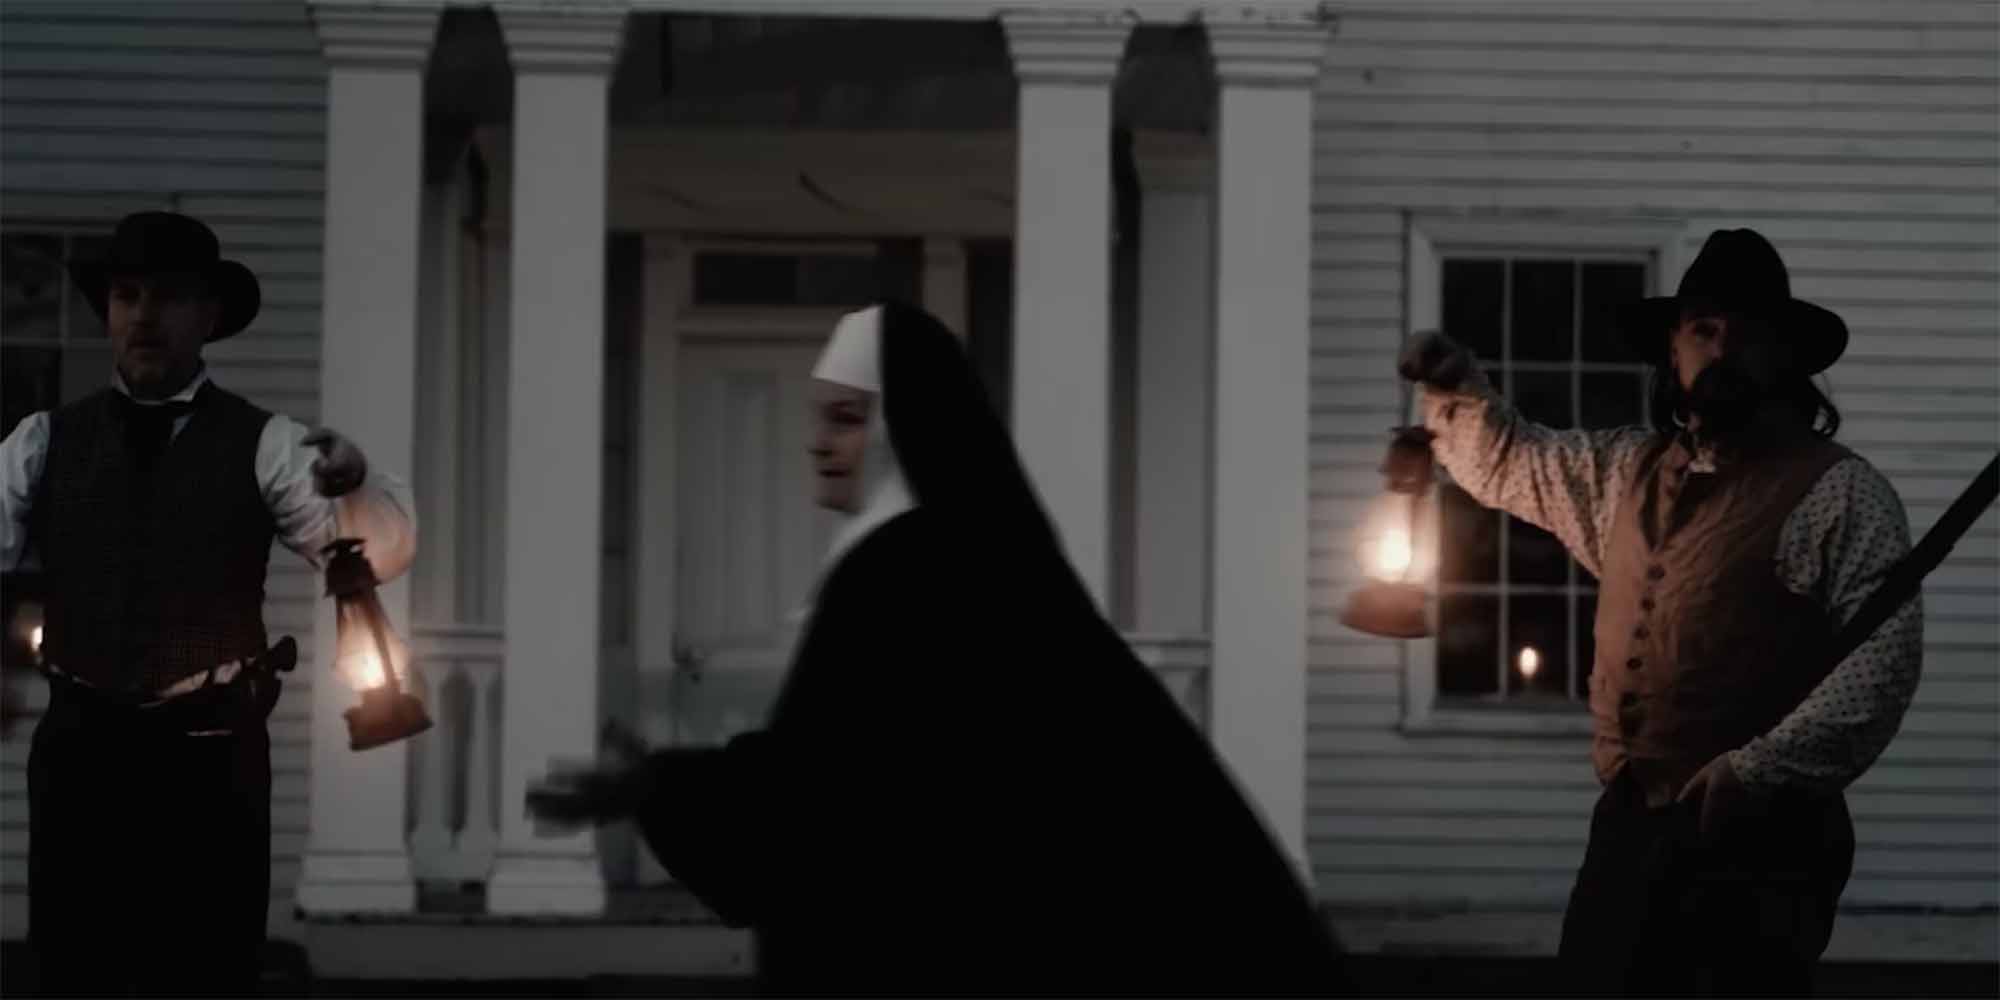 Men waving lanterns as a religious sister arrives